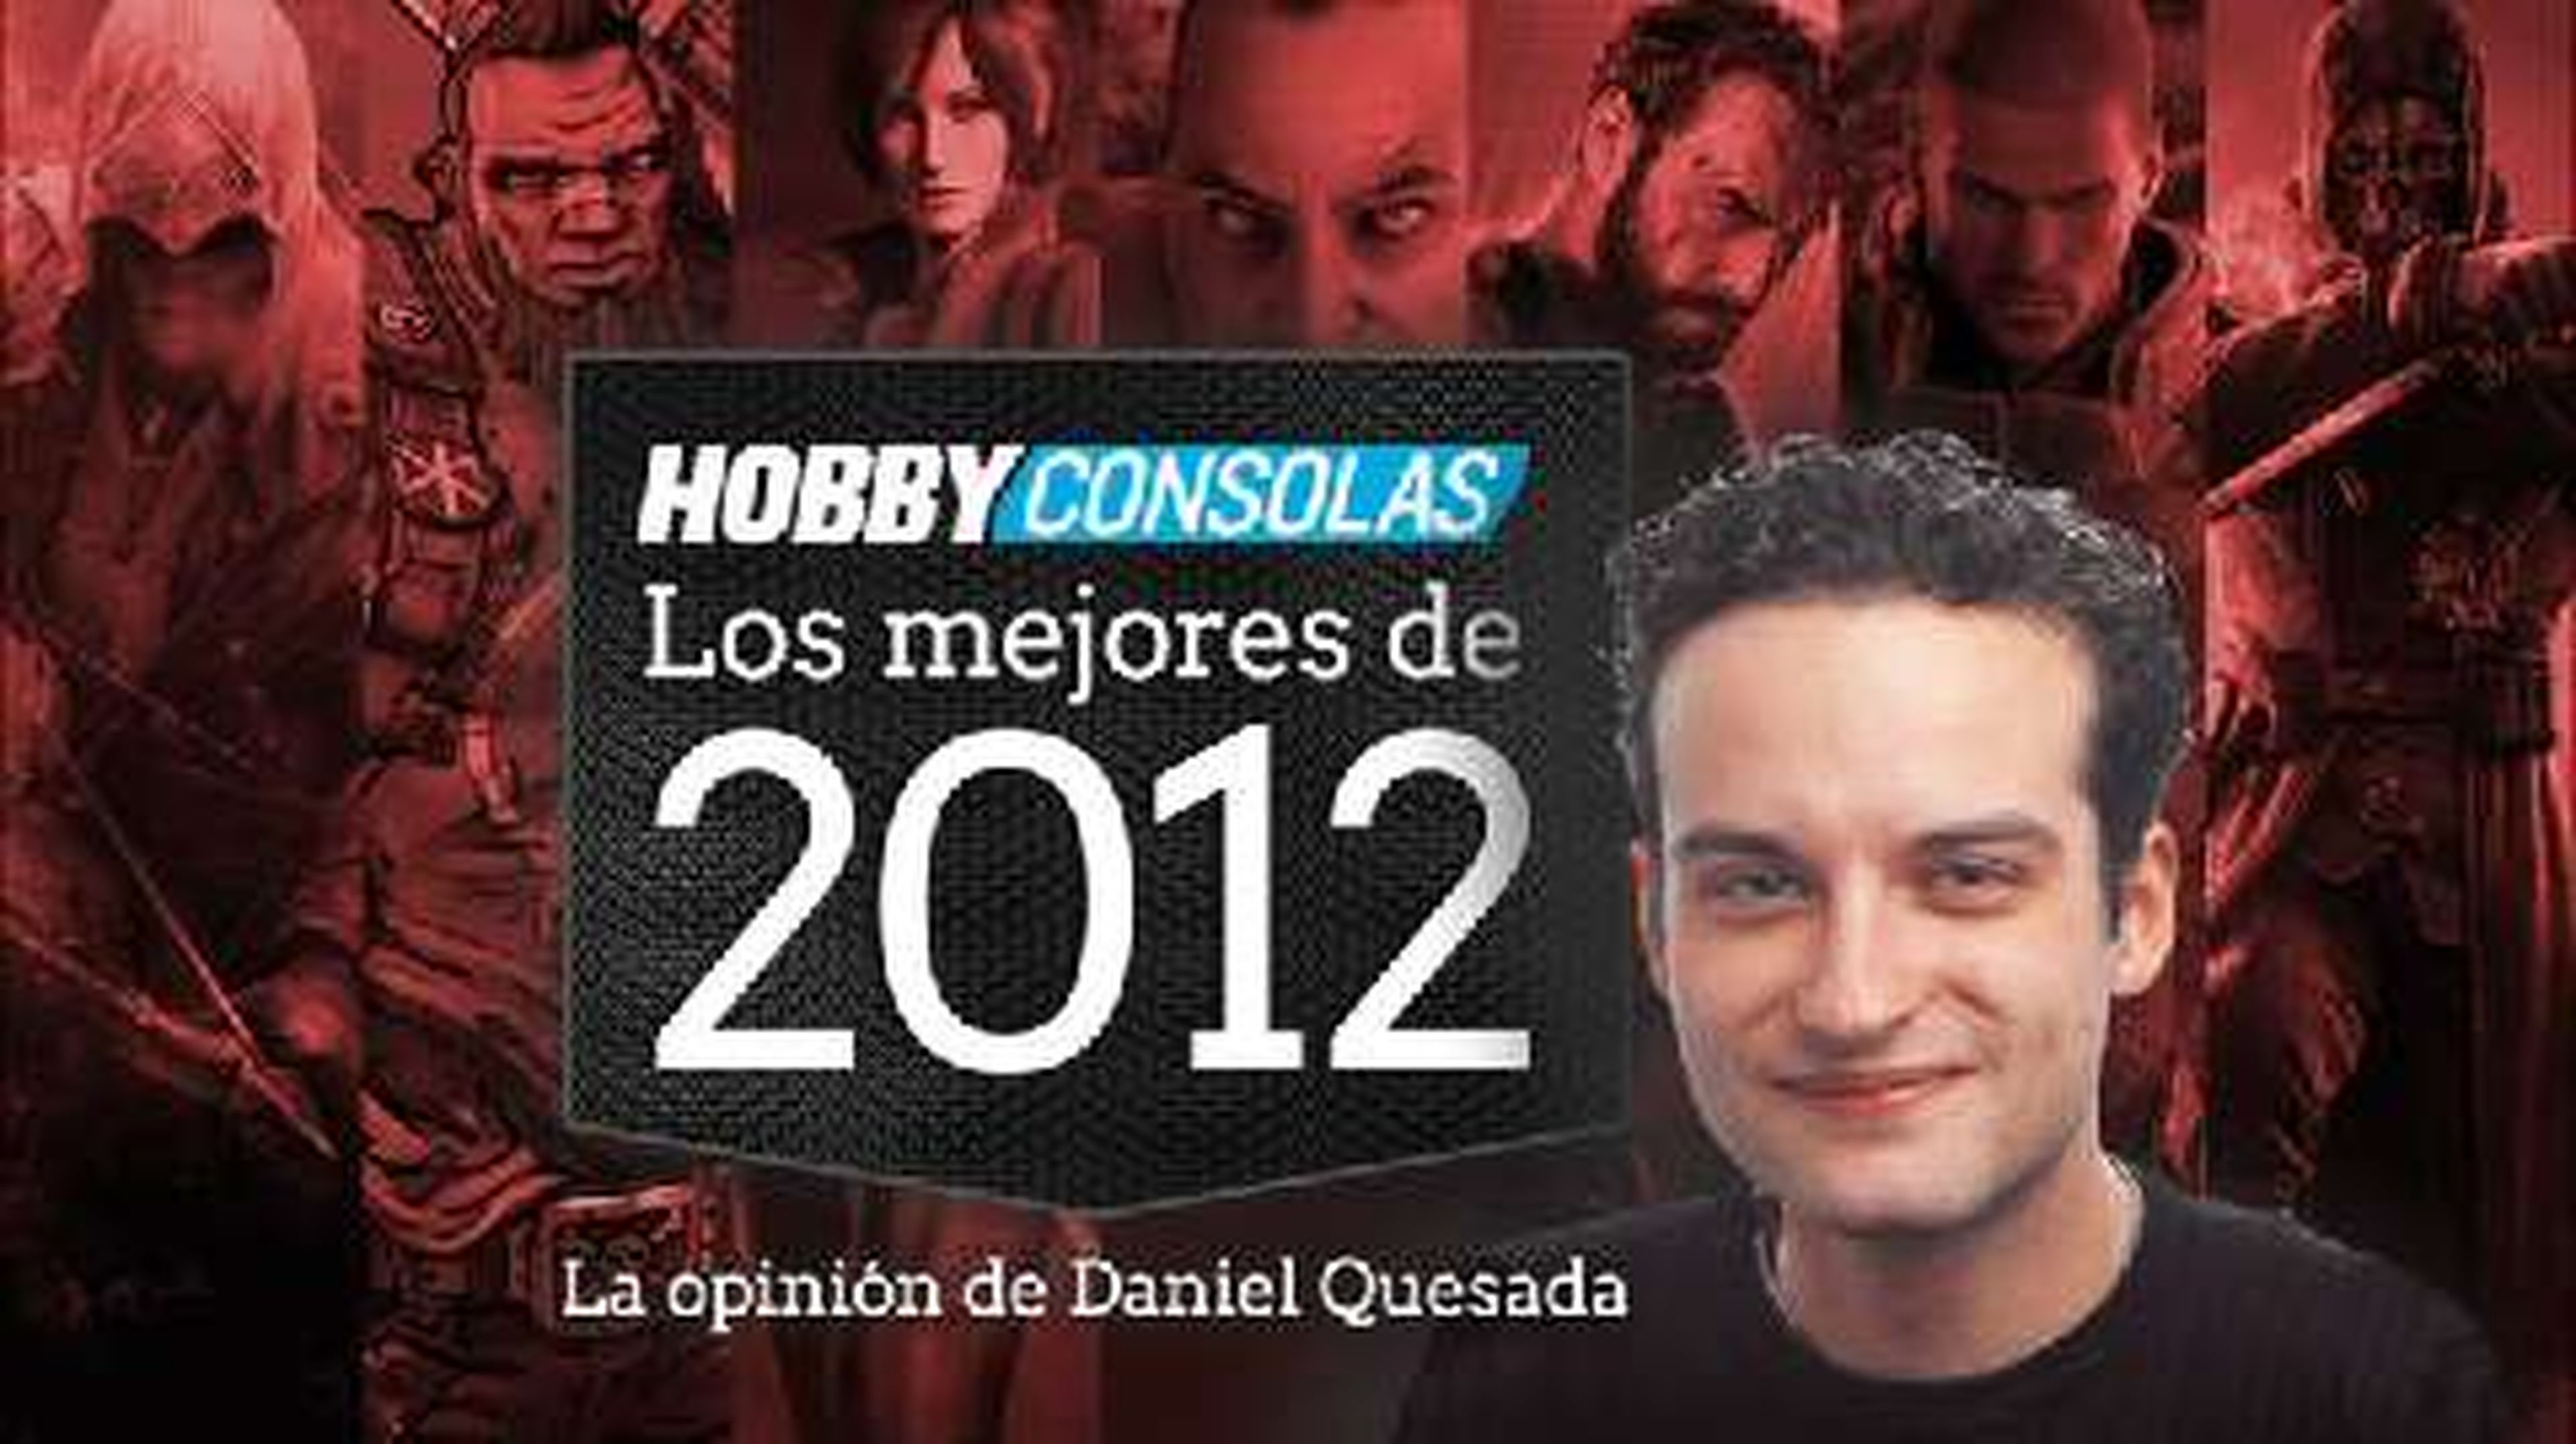 Lo mejor de 2012 (HD) Daniel Quesada en HobbyConsolas.com